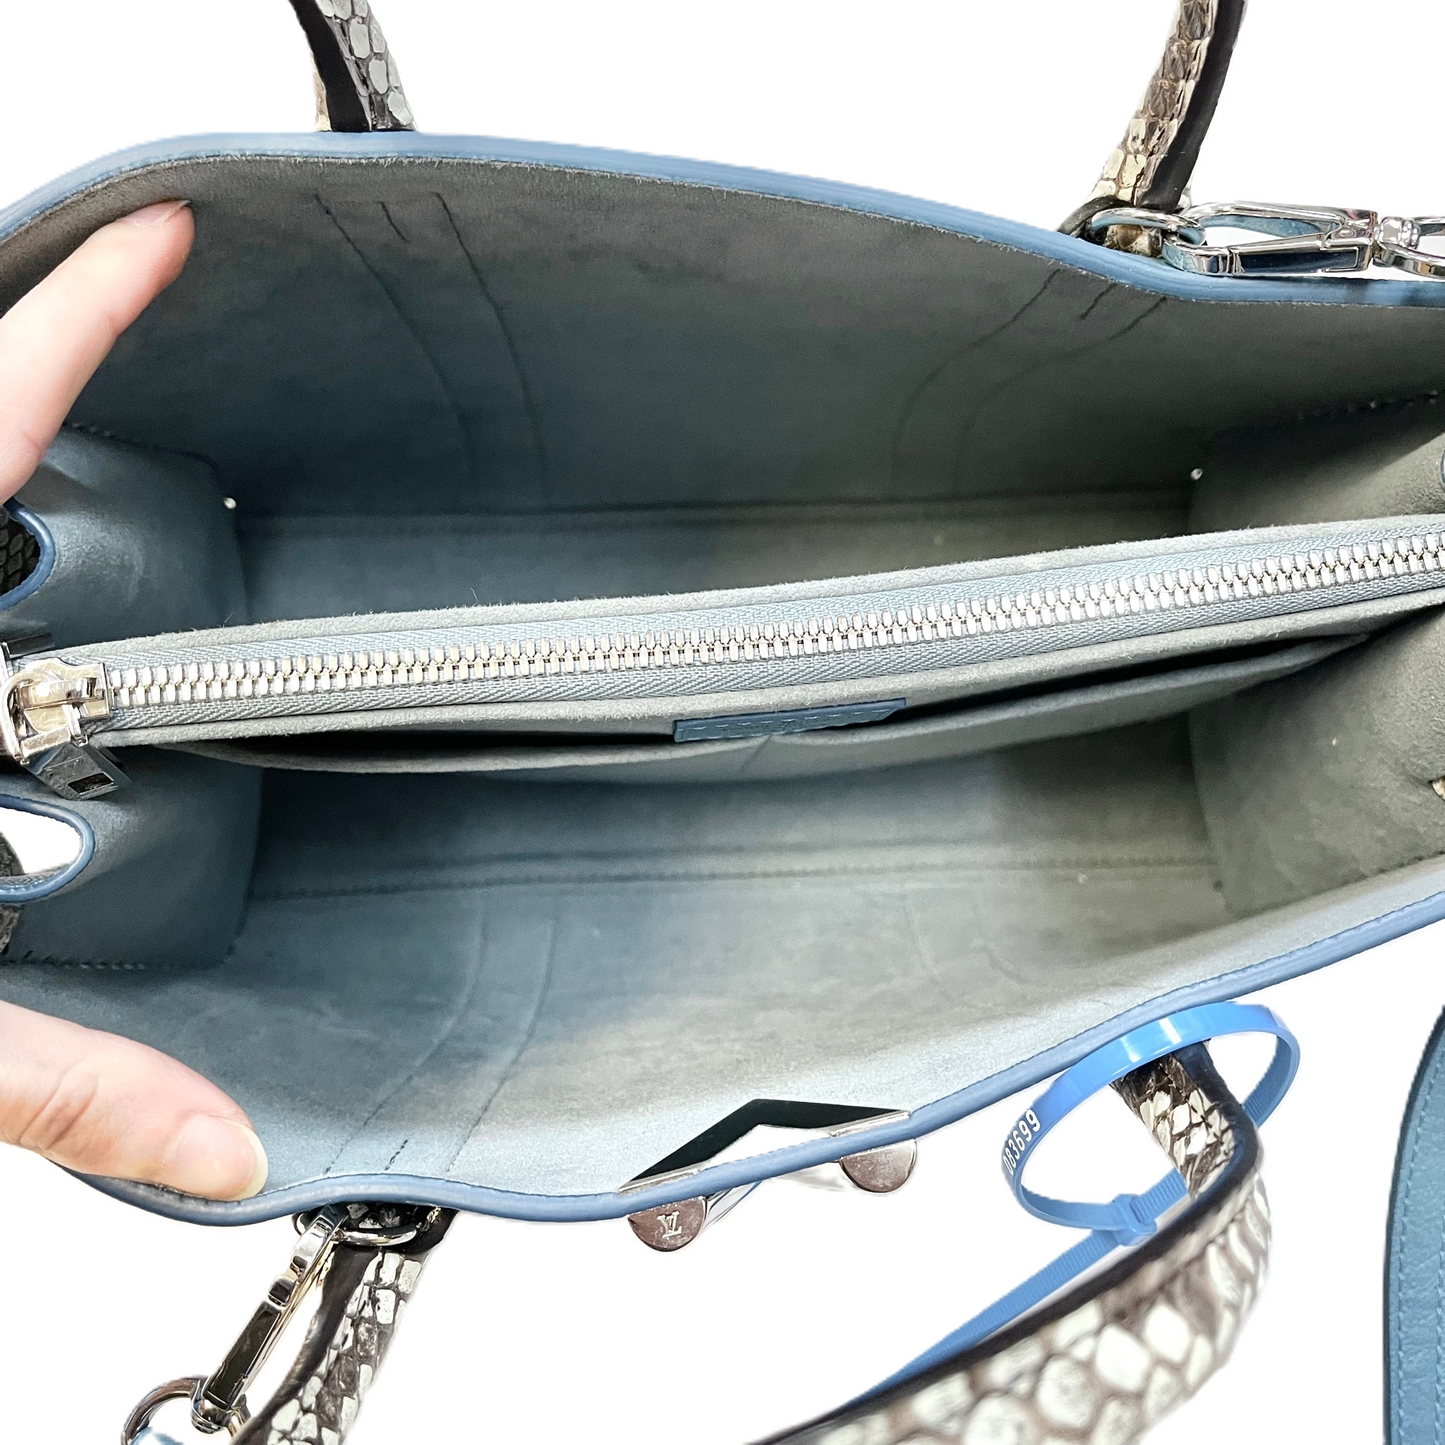 Handbag Luxury Designer By Louis Vuitton, Size: Medium